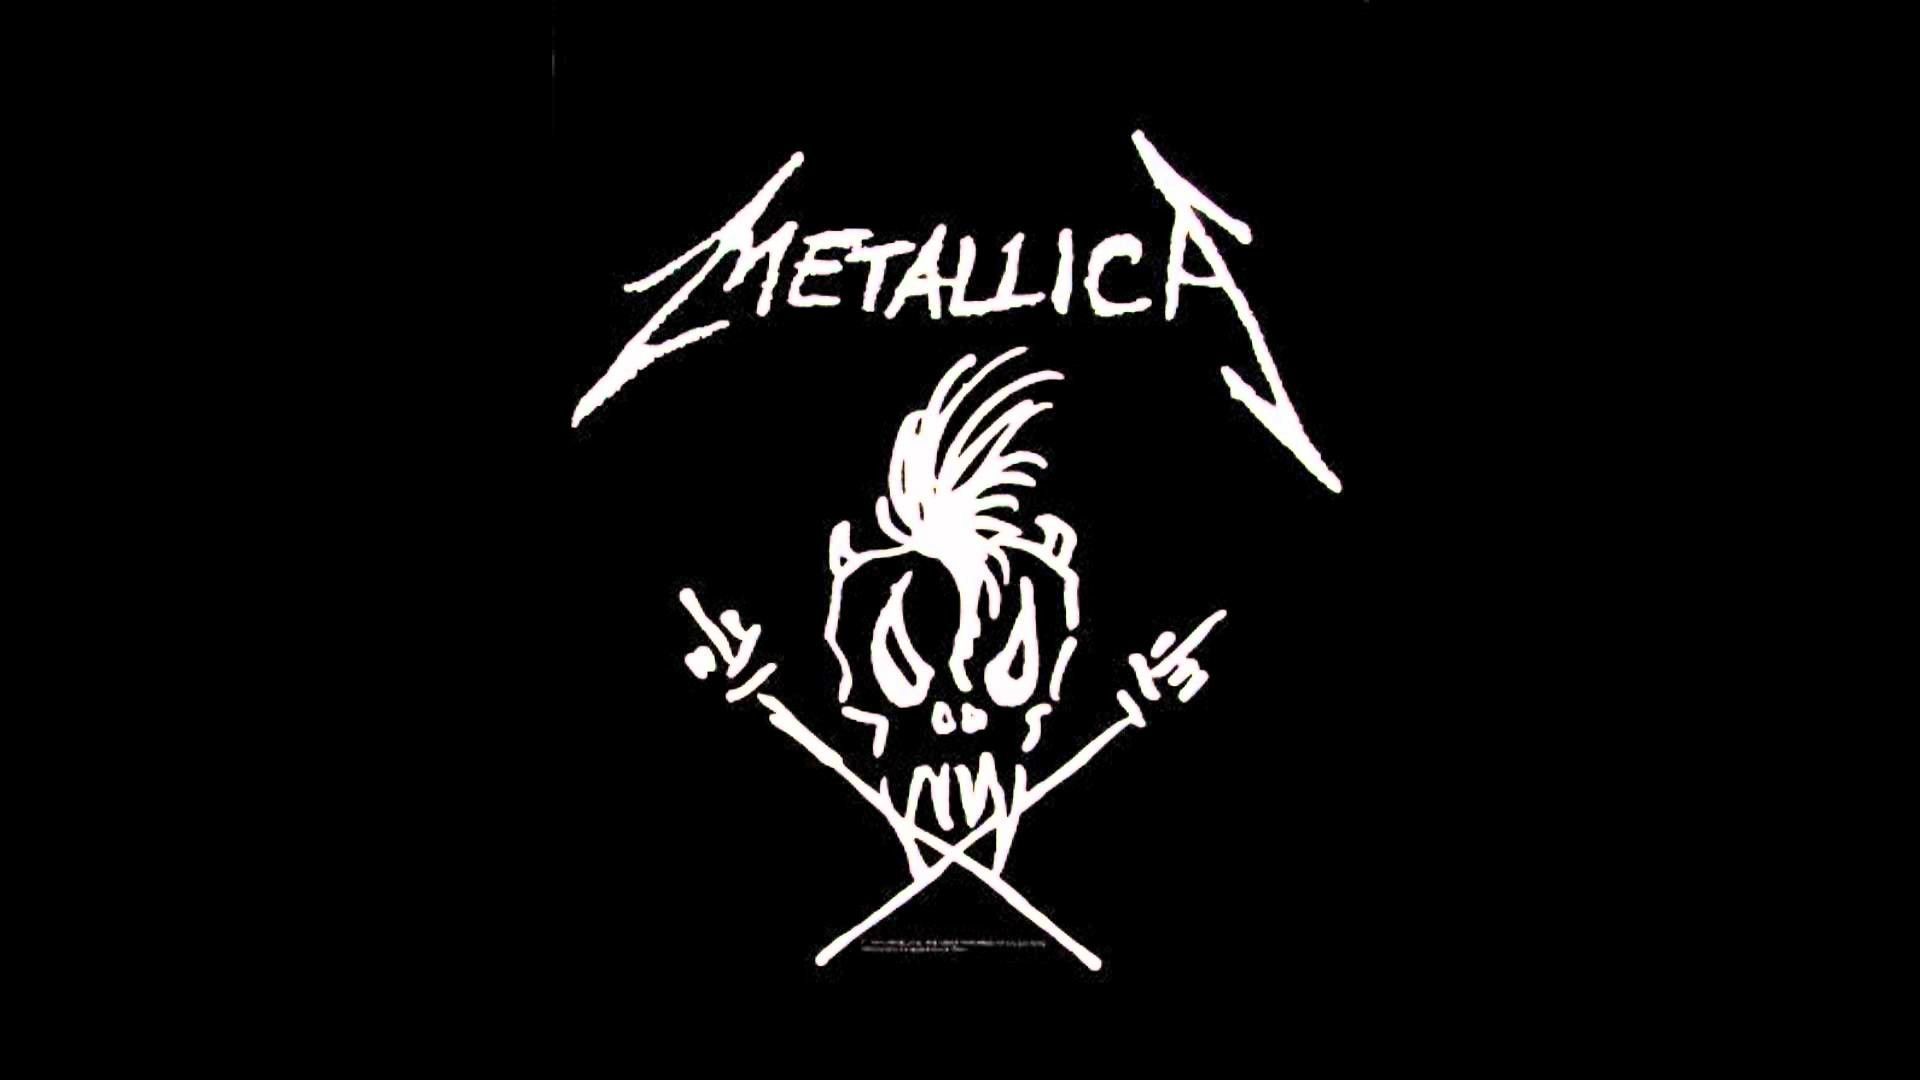 HD wallpaper Metallica logo Music Heavy Metal  Wallpaper Flare